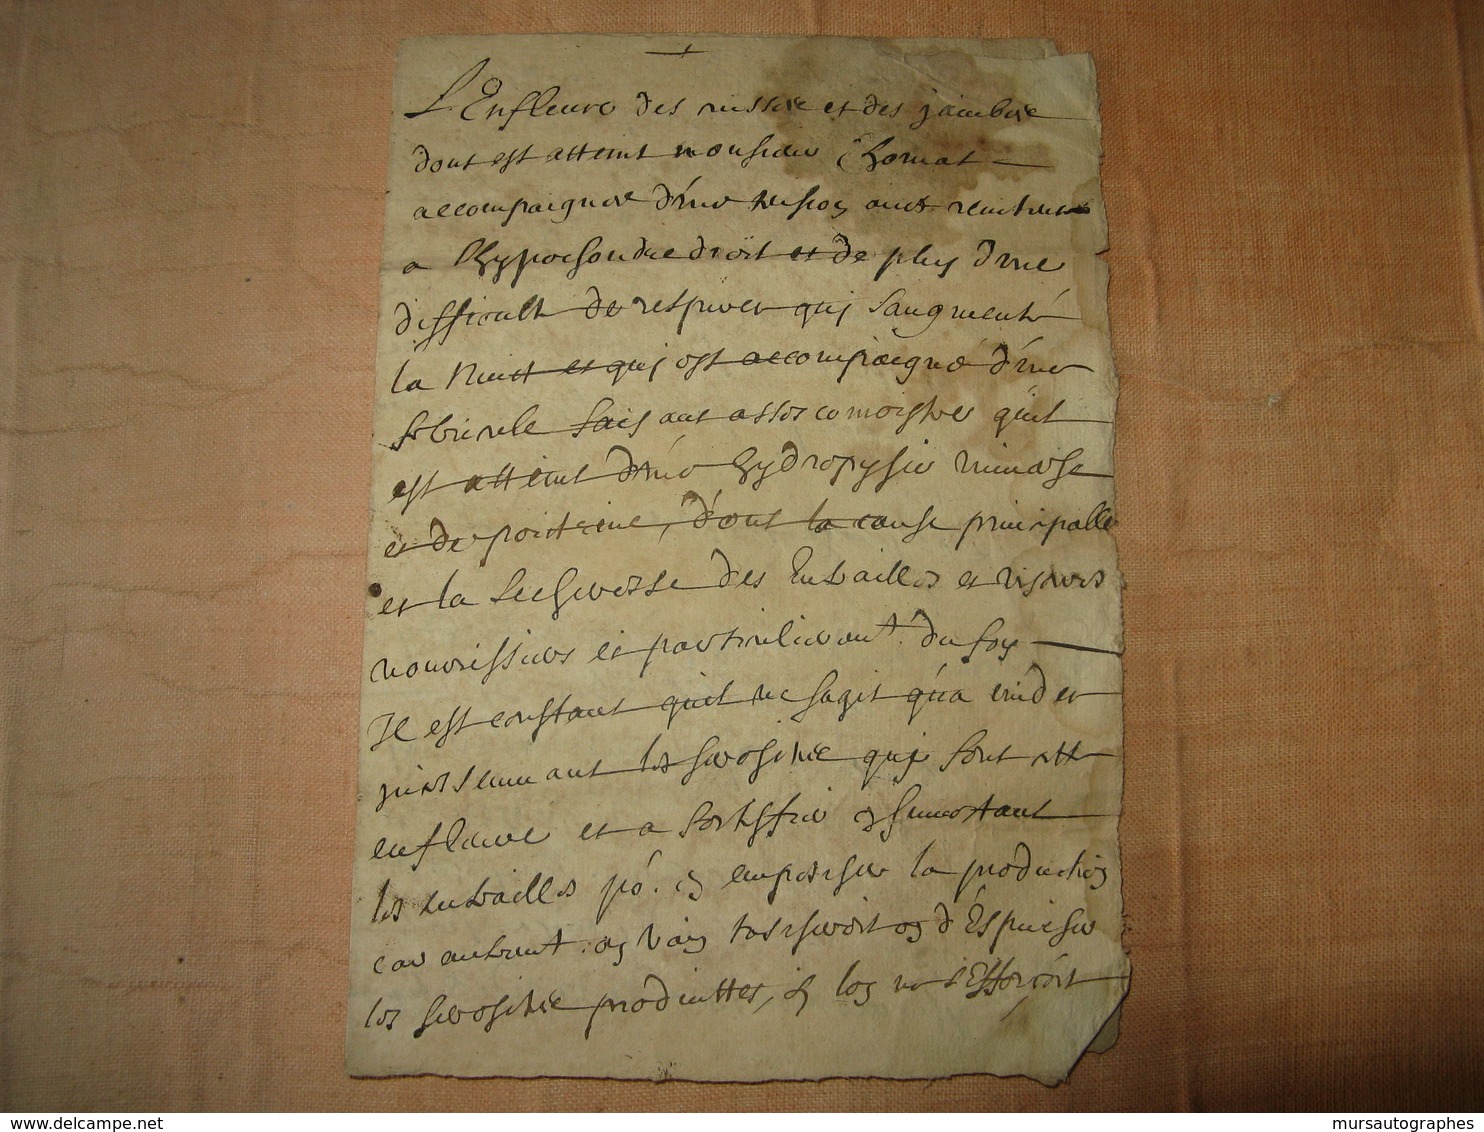 LONGUE ORDONNANCE MEDECINE MANUSCRITE SIGNEE POUR M. CHOMAT 1687 ENFLURES JAMBES HYDROPHISIE - Manuscrits